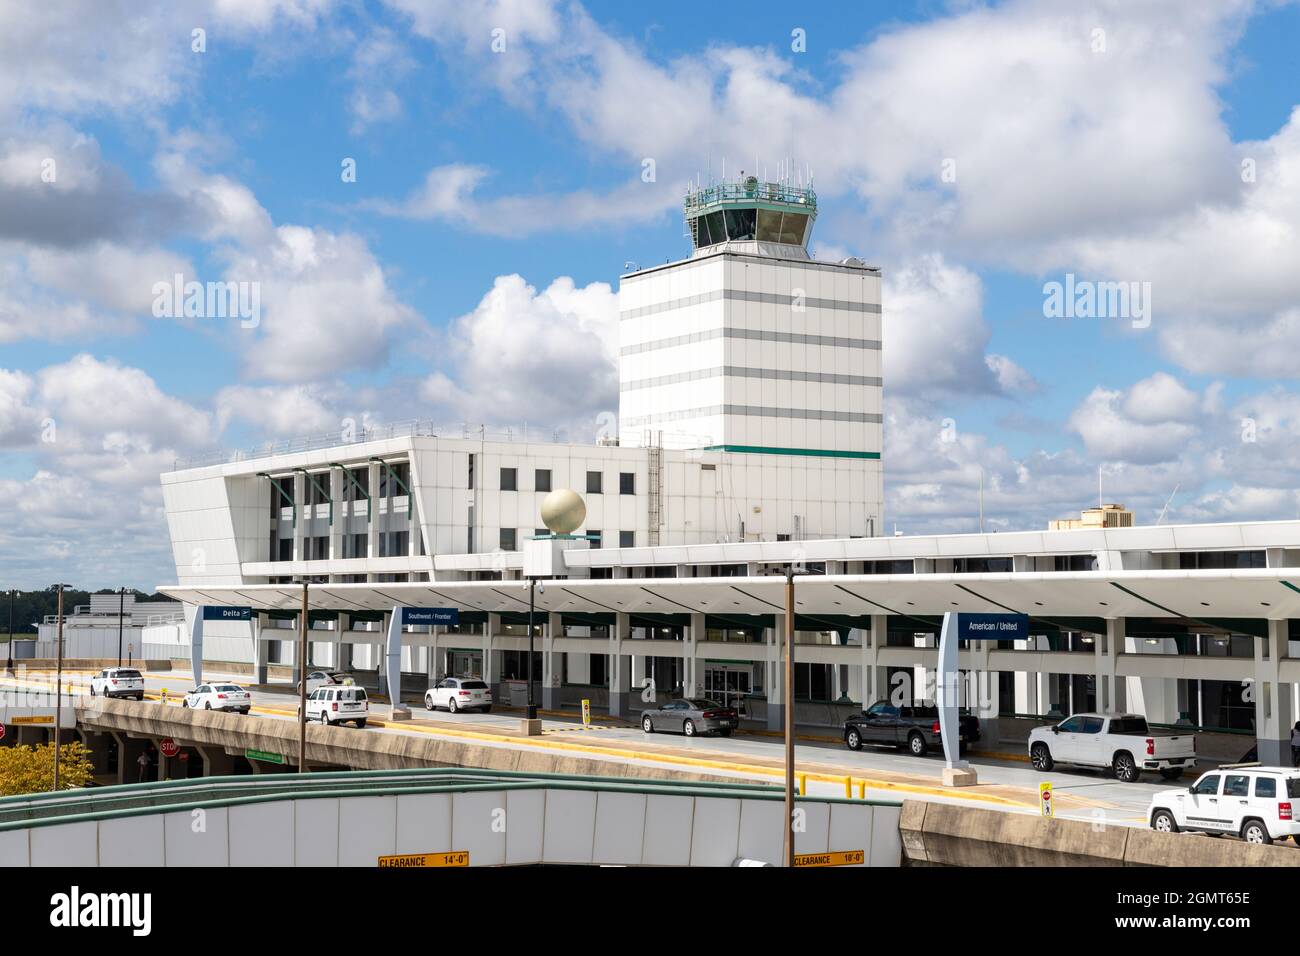 Jackson, MS - 19 septembre 2021 : aéroport international Jackson Medgar Wiley Evers Banque D'Images